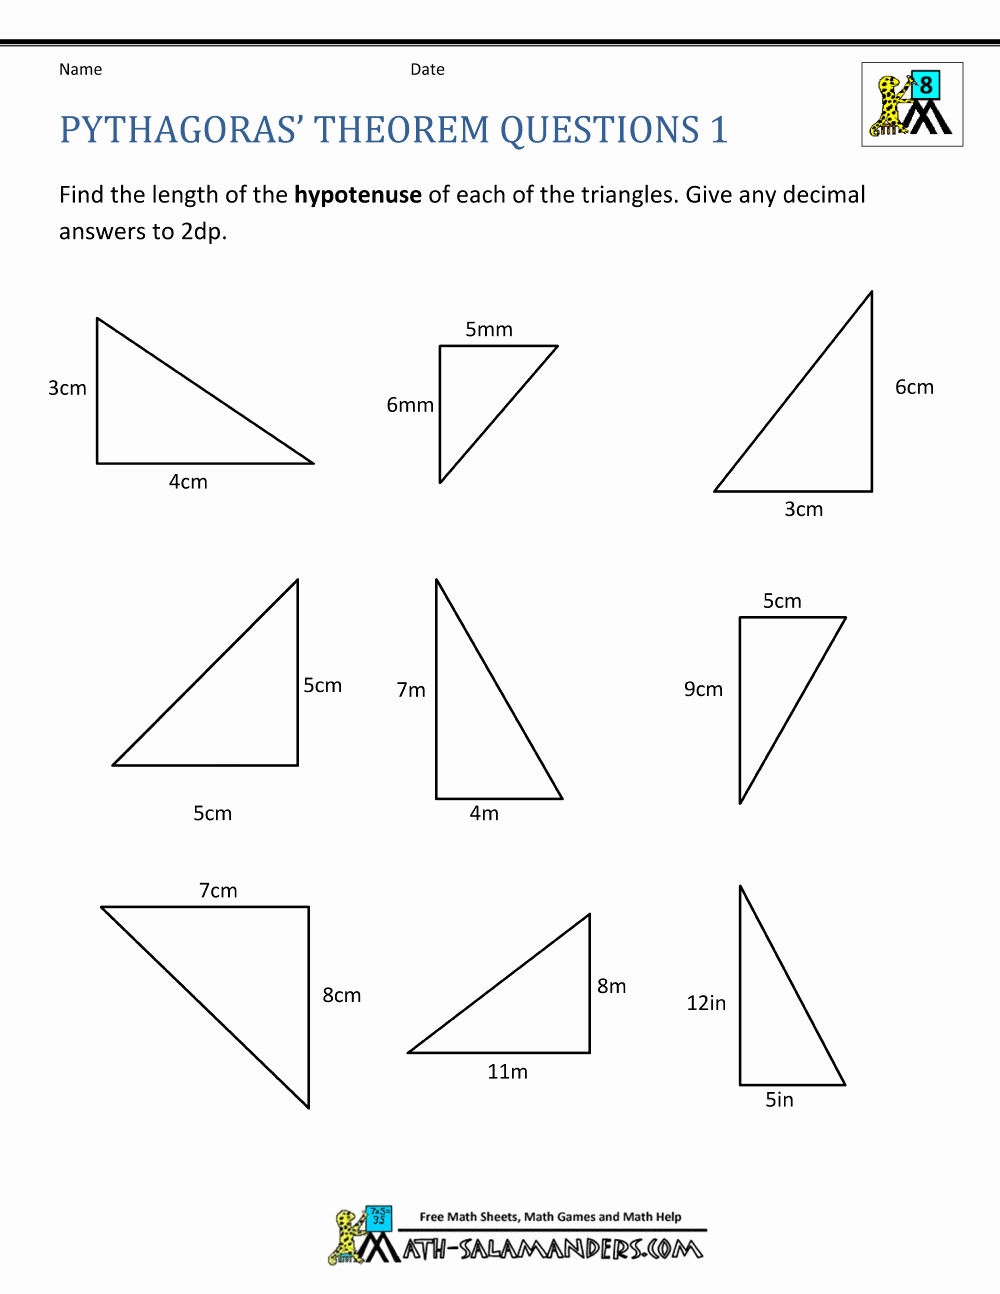 Pythagorean theorem Worksheet 8th Grade Elegant Pythagoras theorem Questions